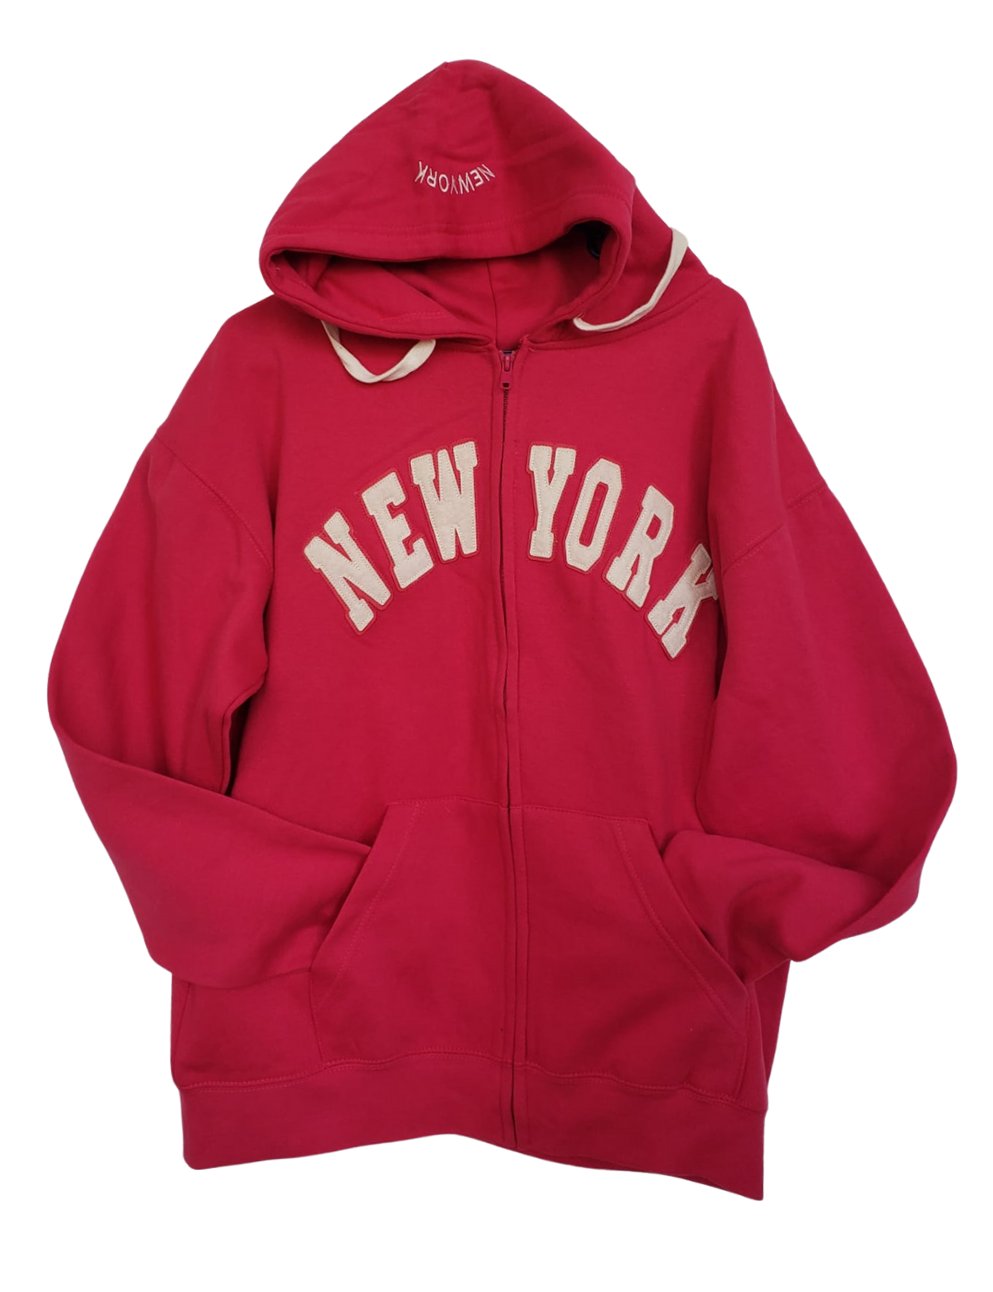 Men's New York City Zippered Hoodie Sweatshirt Black Navy Pink Retro Style, Hot Pink / Medium